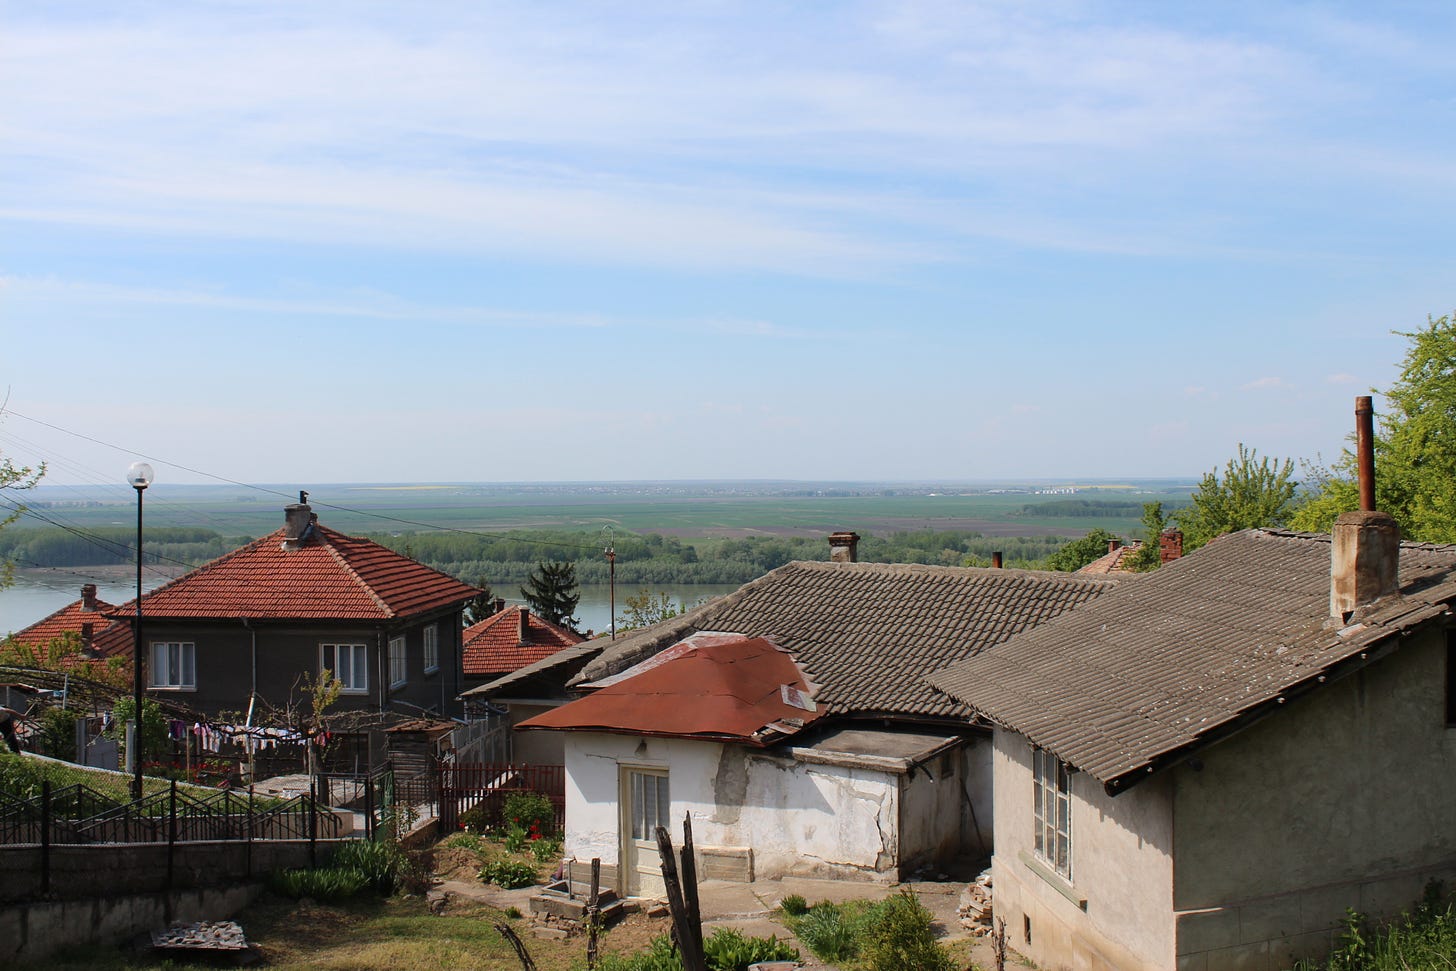 A sleepy Bulgarian village on the bank of the Danube.